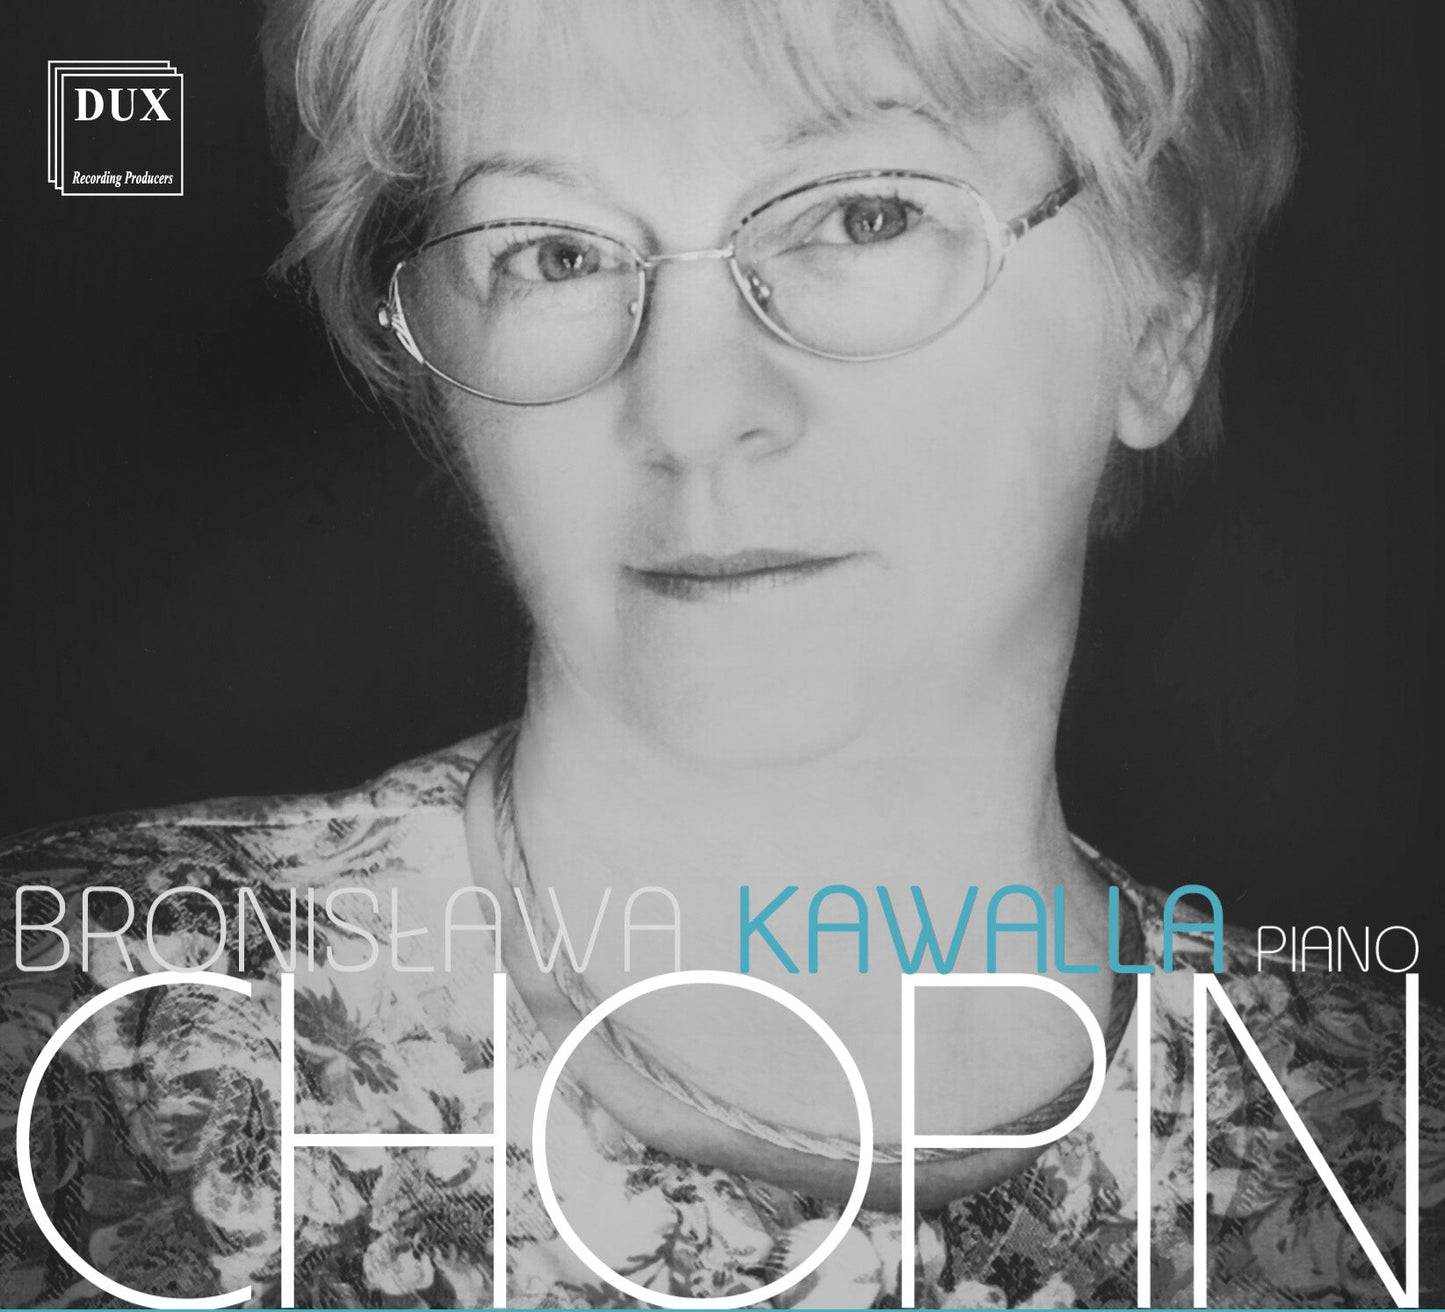 Chopin: Piano Works  Bronislawa Kawalla